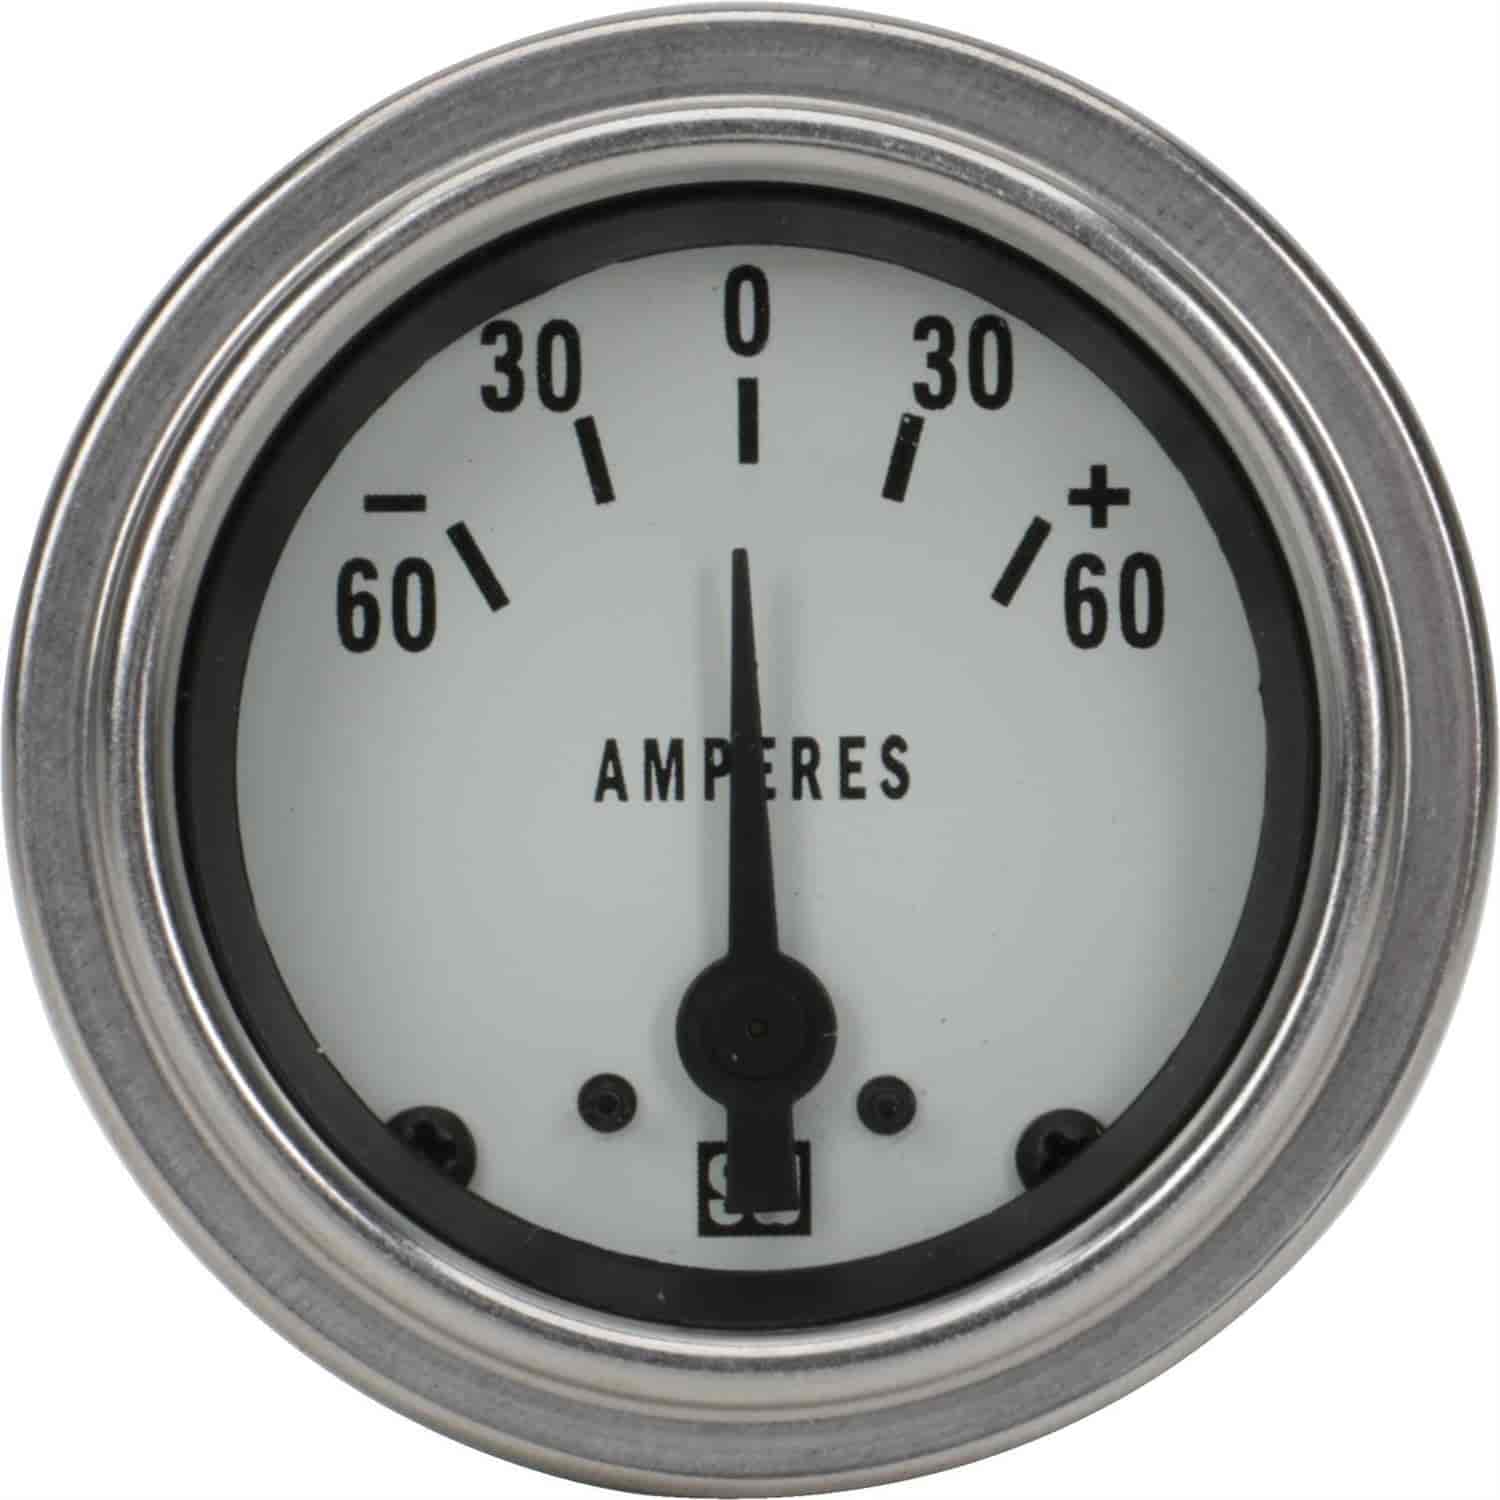 Deluxe-Series Ammeter Gauge, 2-1/16 in. Diameter, Electrical - White Facedial